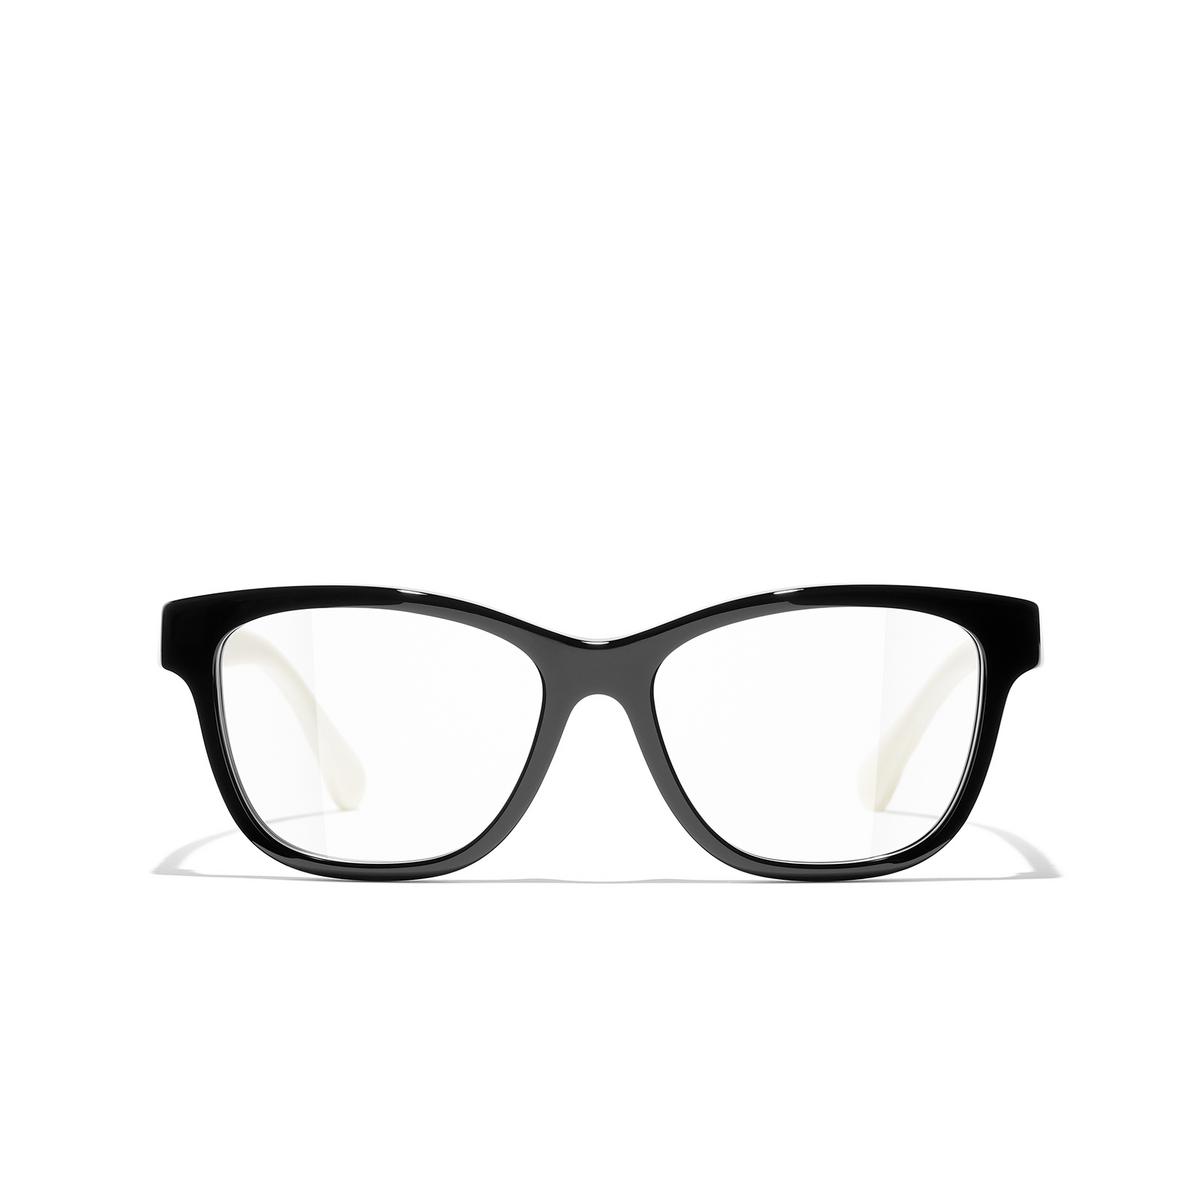 CHANEL square Eyeglasses 1656 Black & White - front view